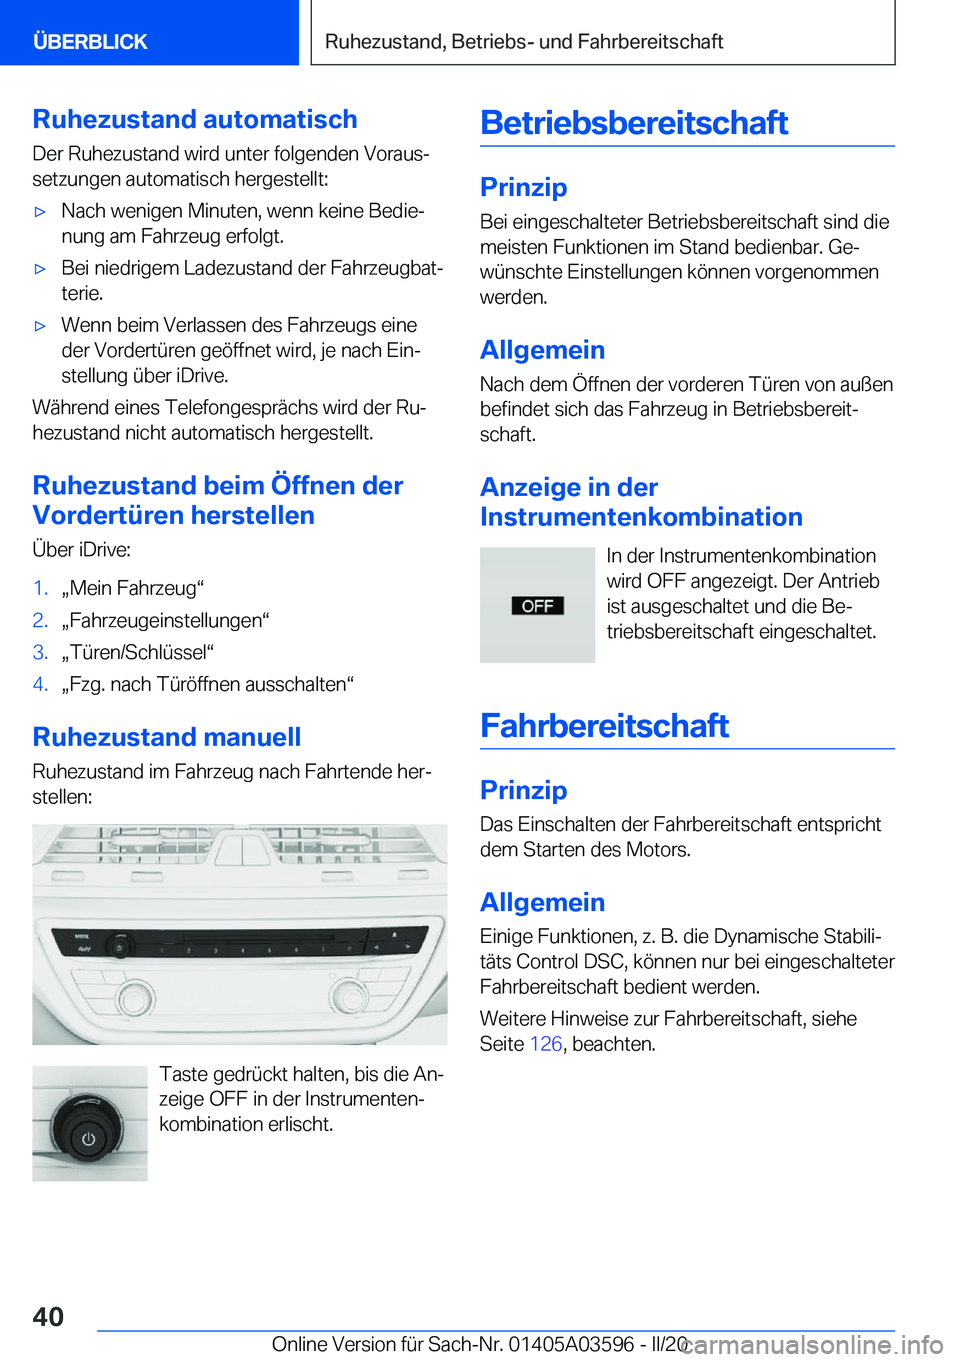 BMW X4 2020  Betriebsanleitungen (in German) �R�u�h�e�z�u�s�t�a�n�d��a�u�t�o�m�a�t�i�s�c�h�D�e�r��R�u�h�e�z�u�s�t�a�n�d��w�i�r�d��u�n�t�e�r��f�o�l�g�e�n�d�e�n��V�o�r�a�u�sj�s�e�t�z�u�n�g�e�n��a�u�t�o�m�a�t�i�s�c�h��h�e�r�g�e�s�t�e�l�l�t